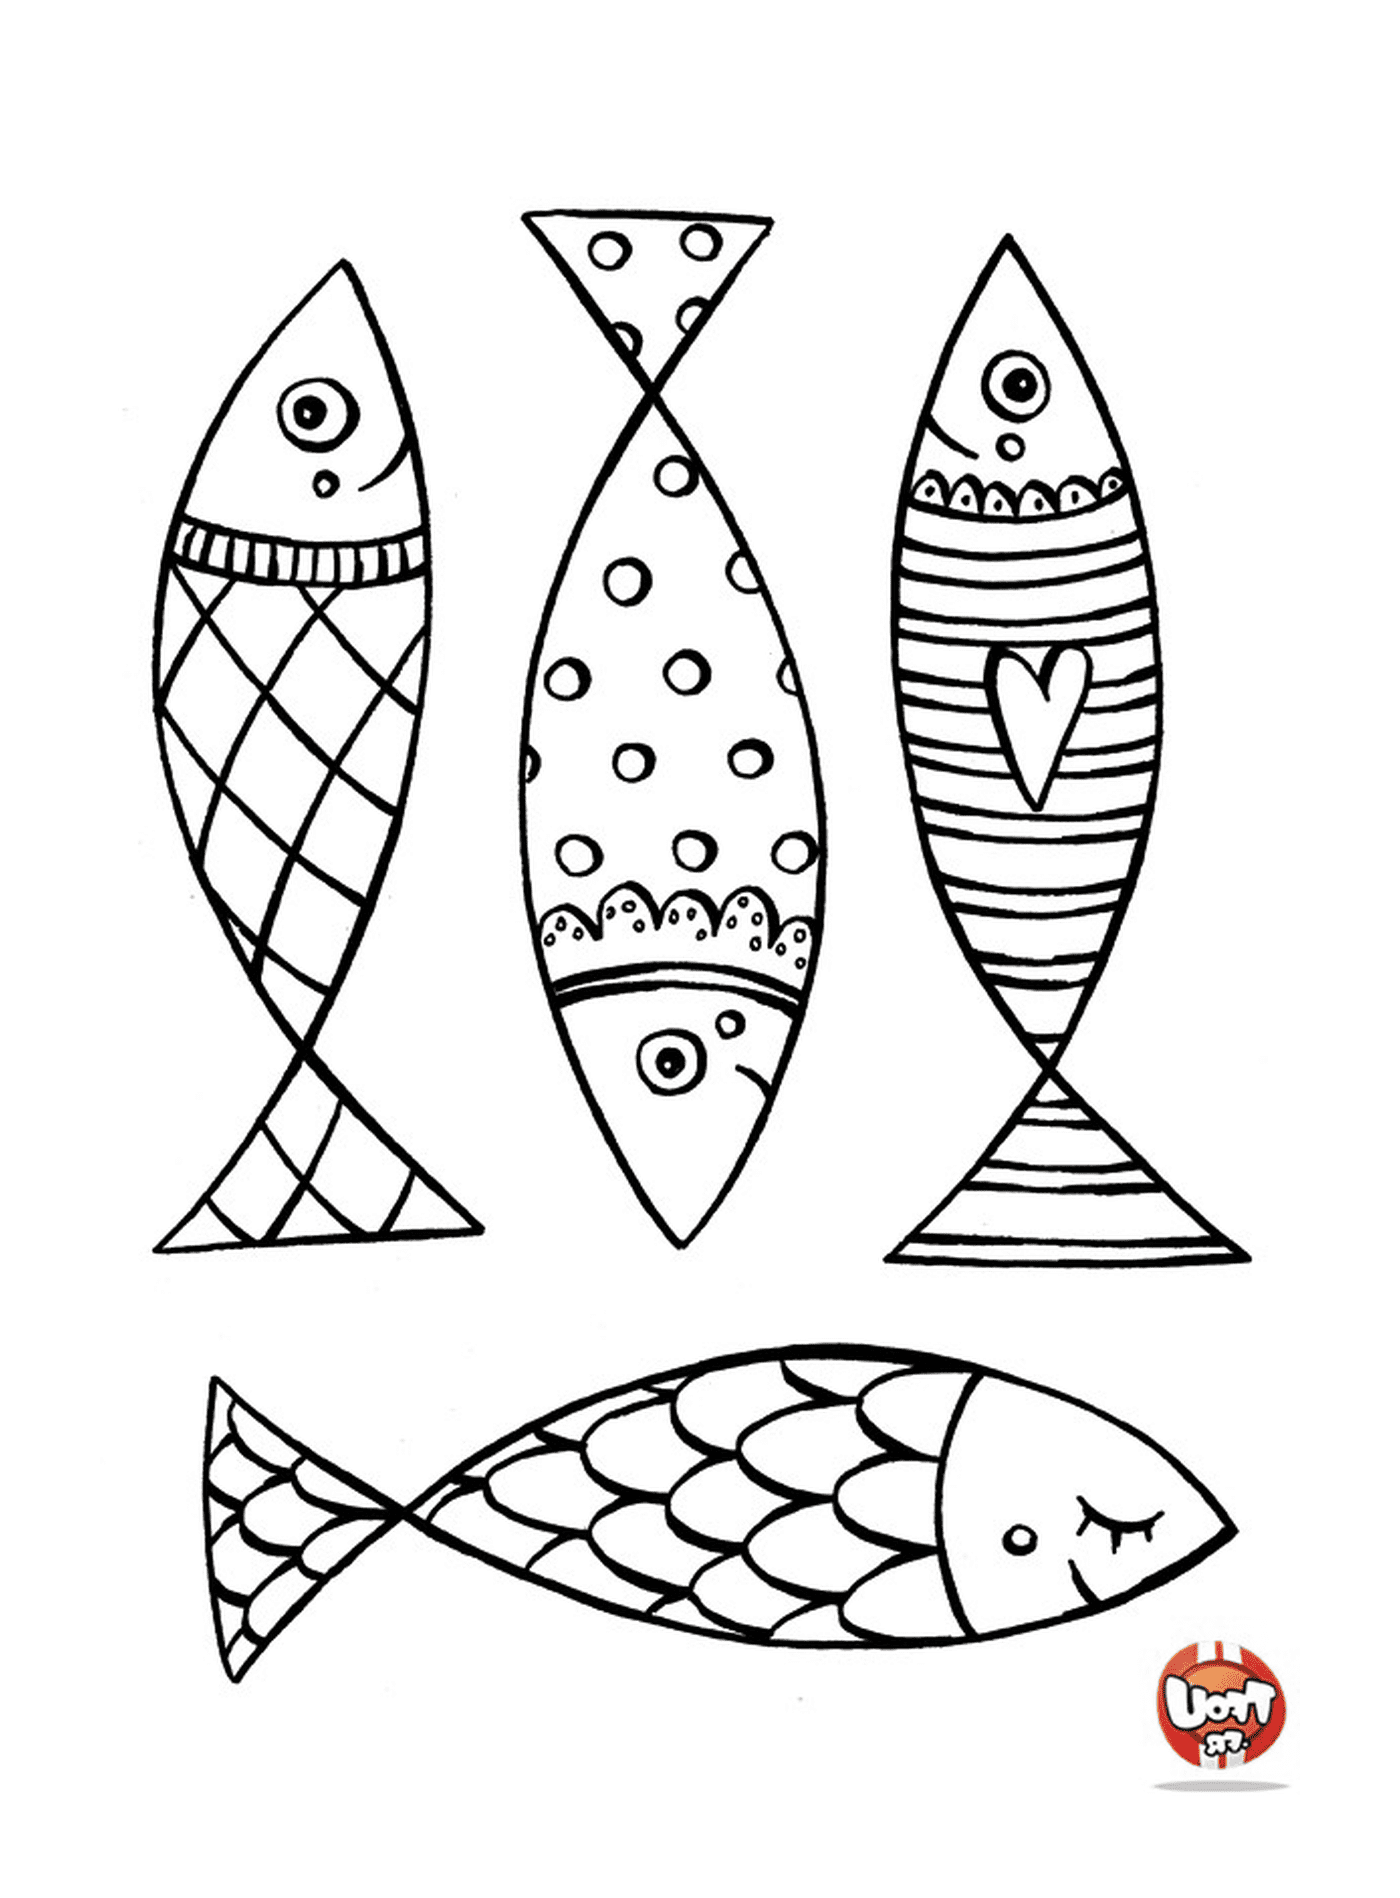  Conjunto de quatro desenhos de peixes diferentes 